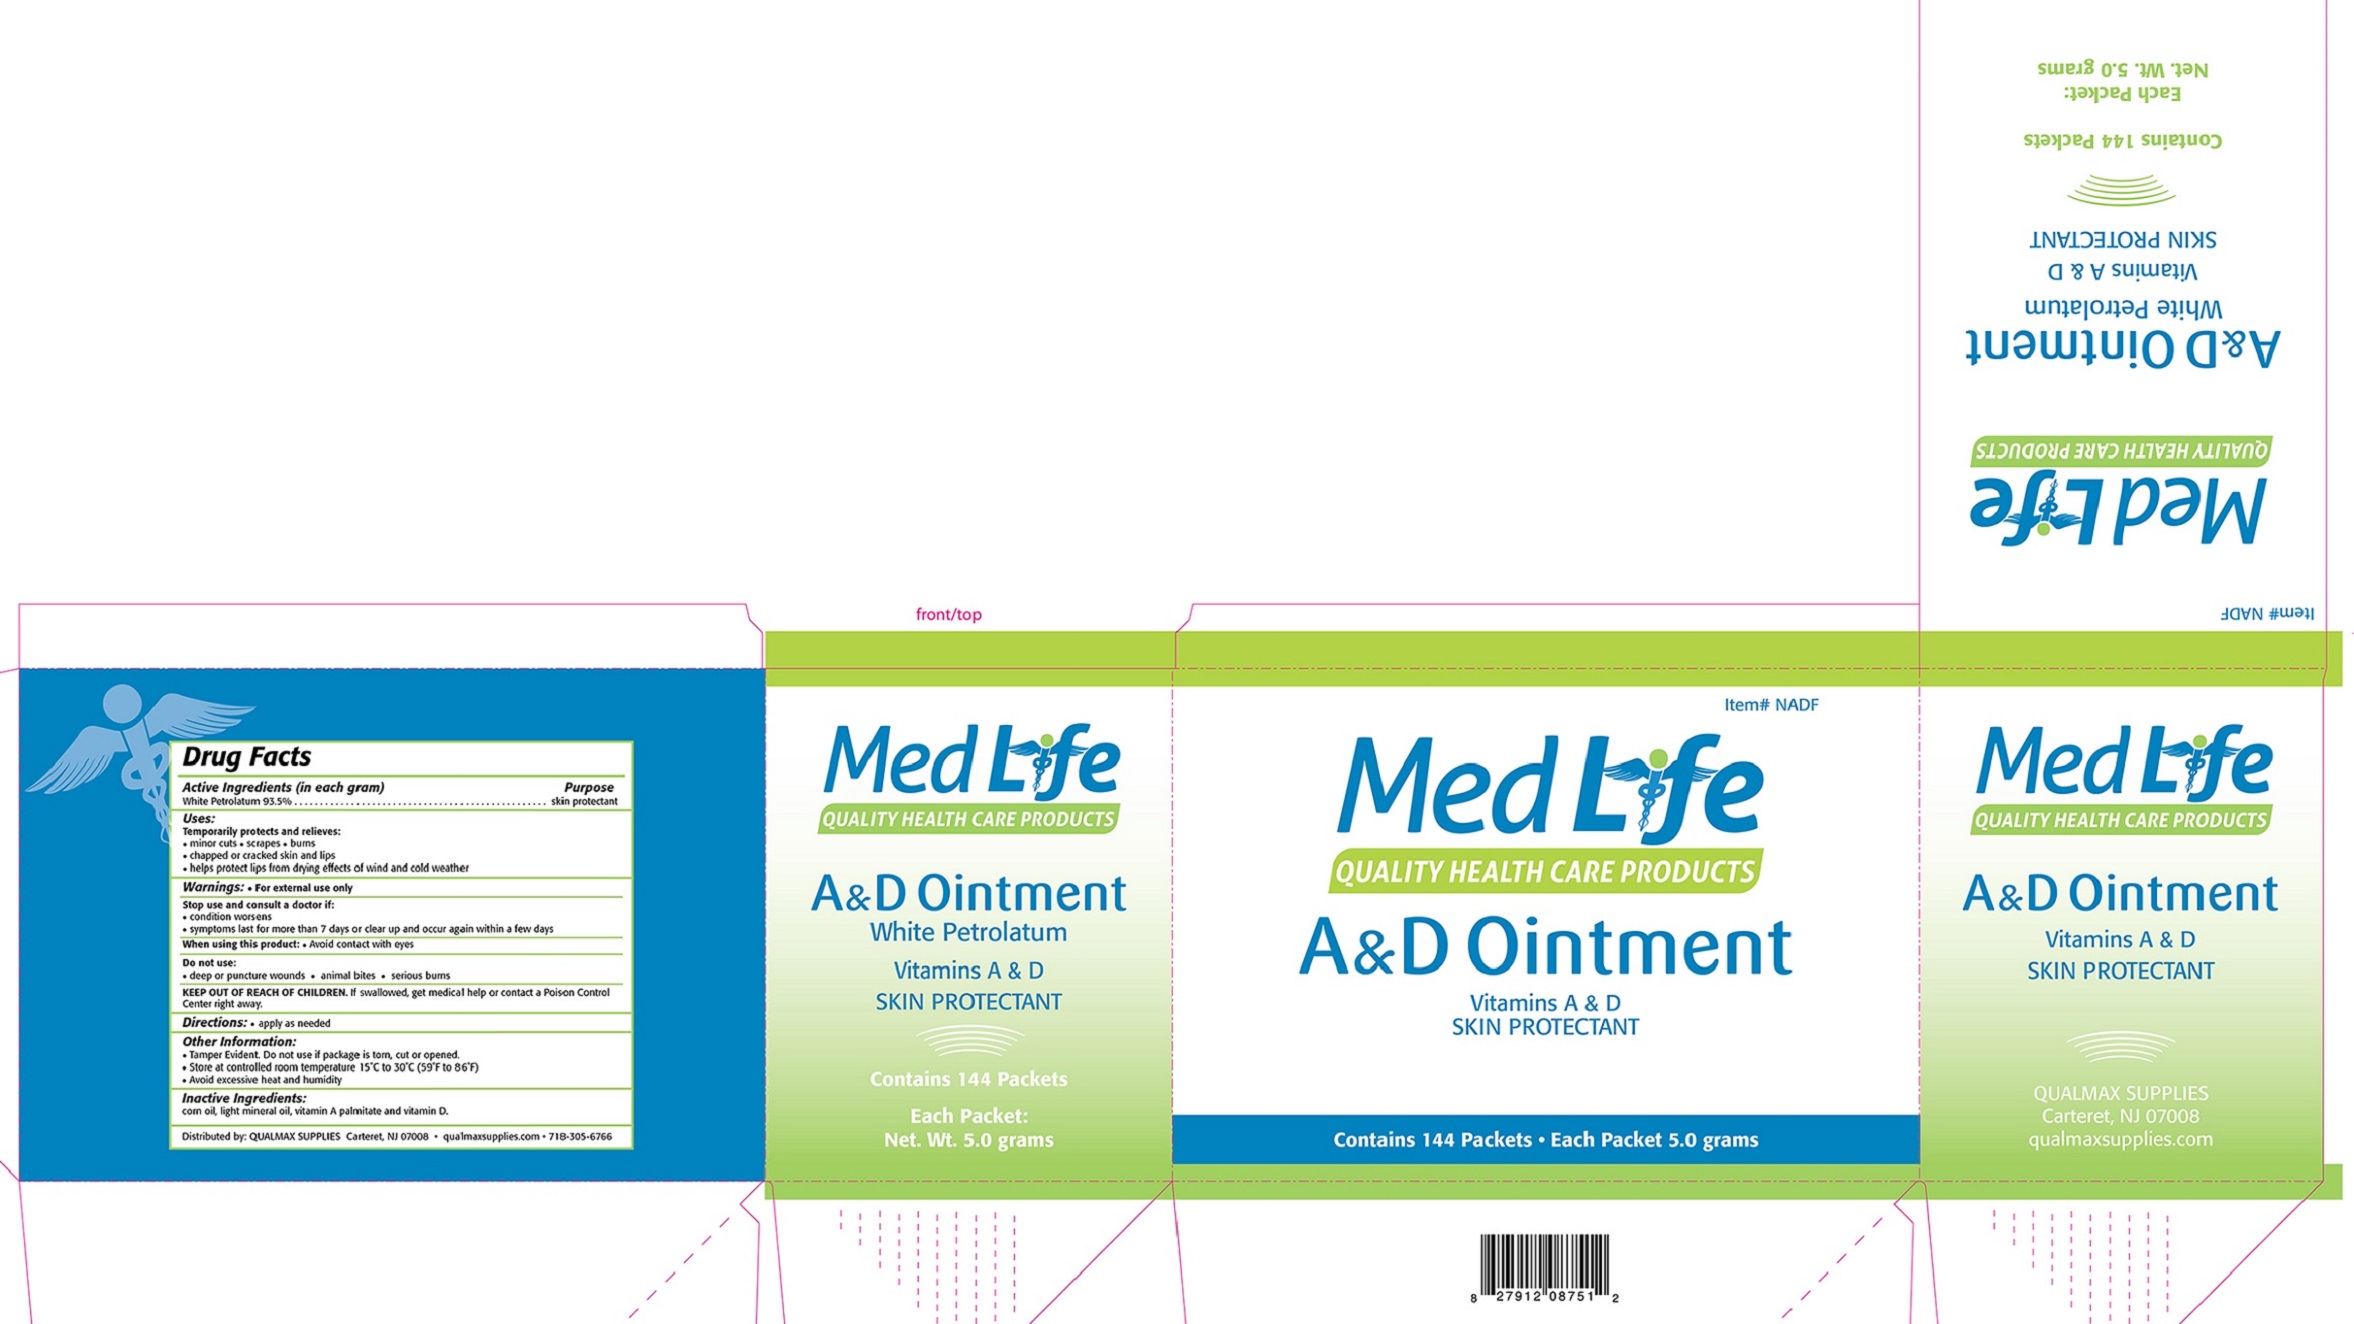 MedLife A&D Ointment